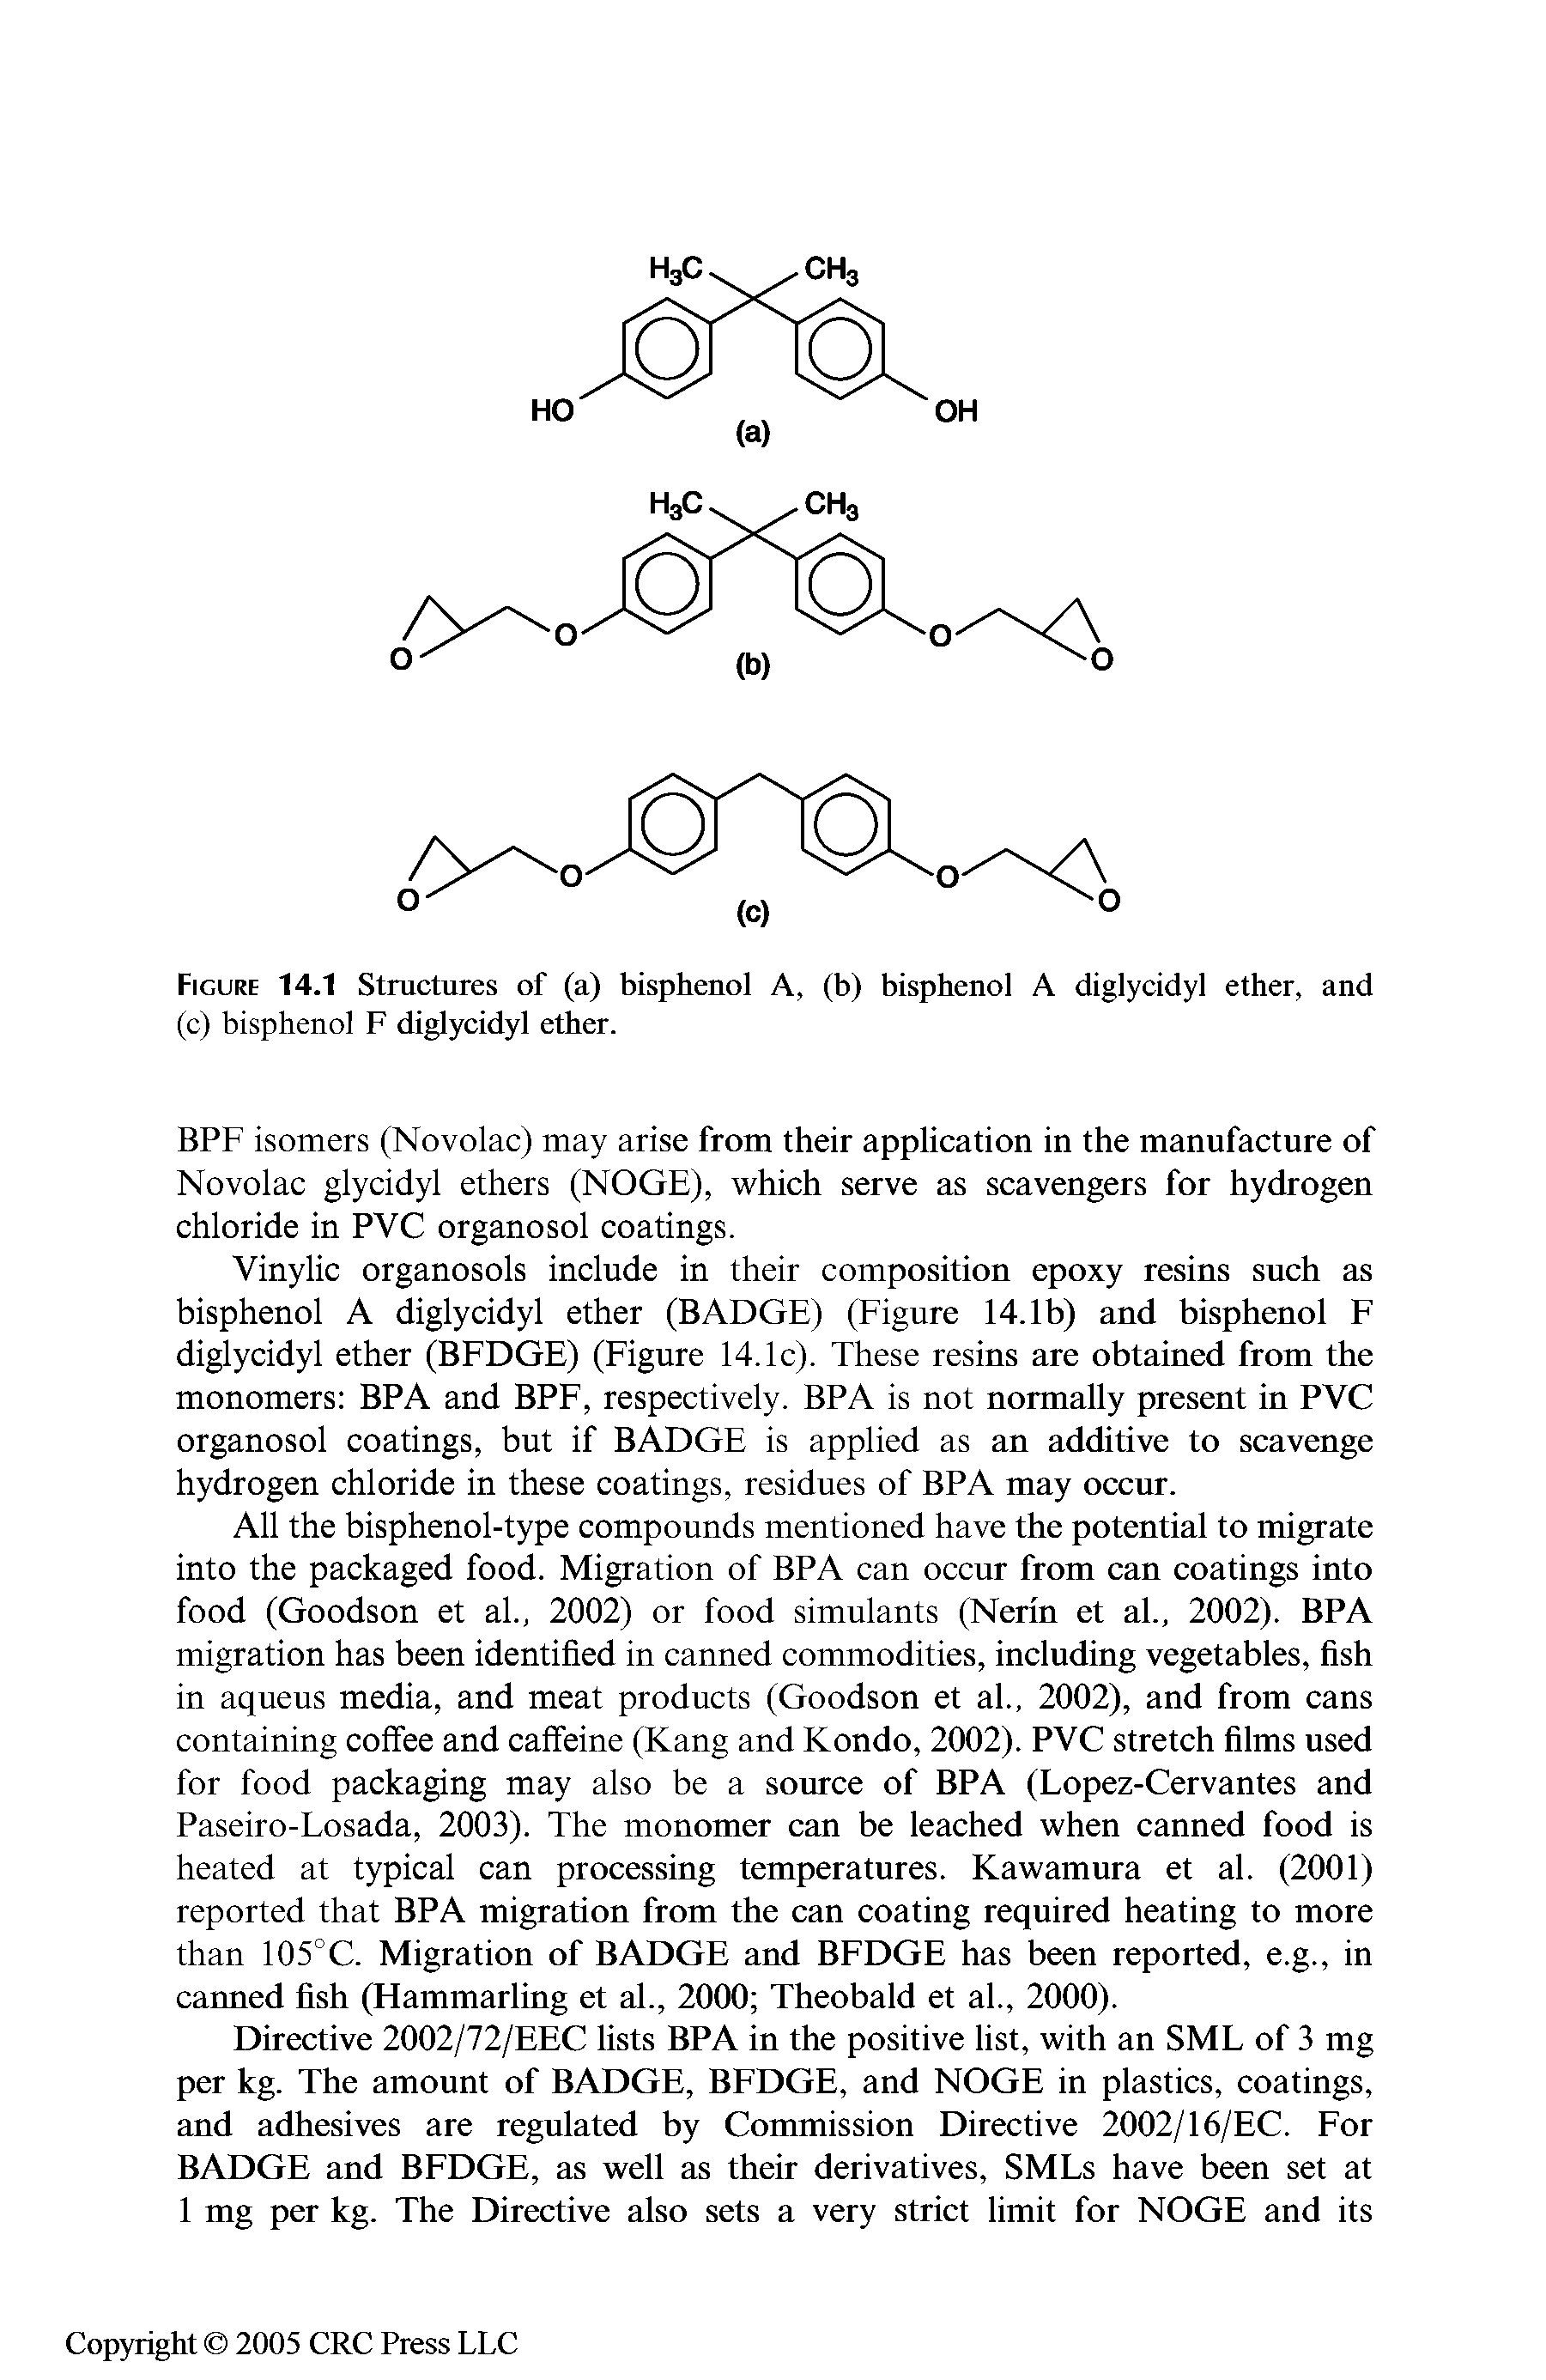 Figure 14.1 Structures of (a) bisphenol A, (b) bisphenol A diglycidyl ether, and (c) bisphenol F diglycidyl ether.